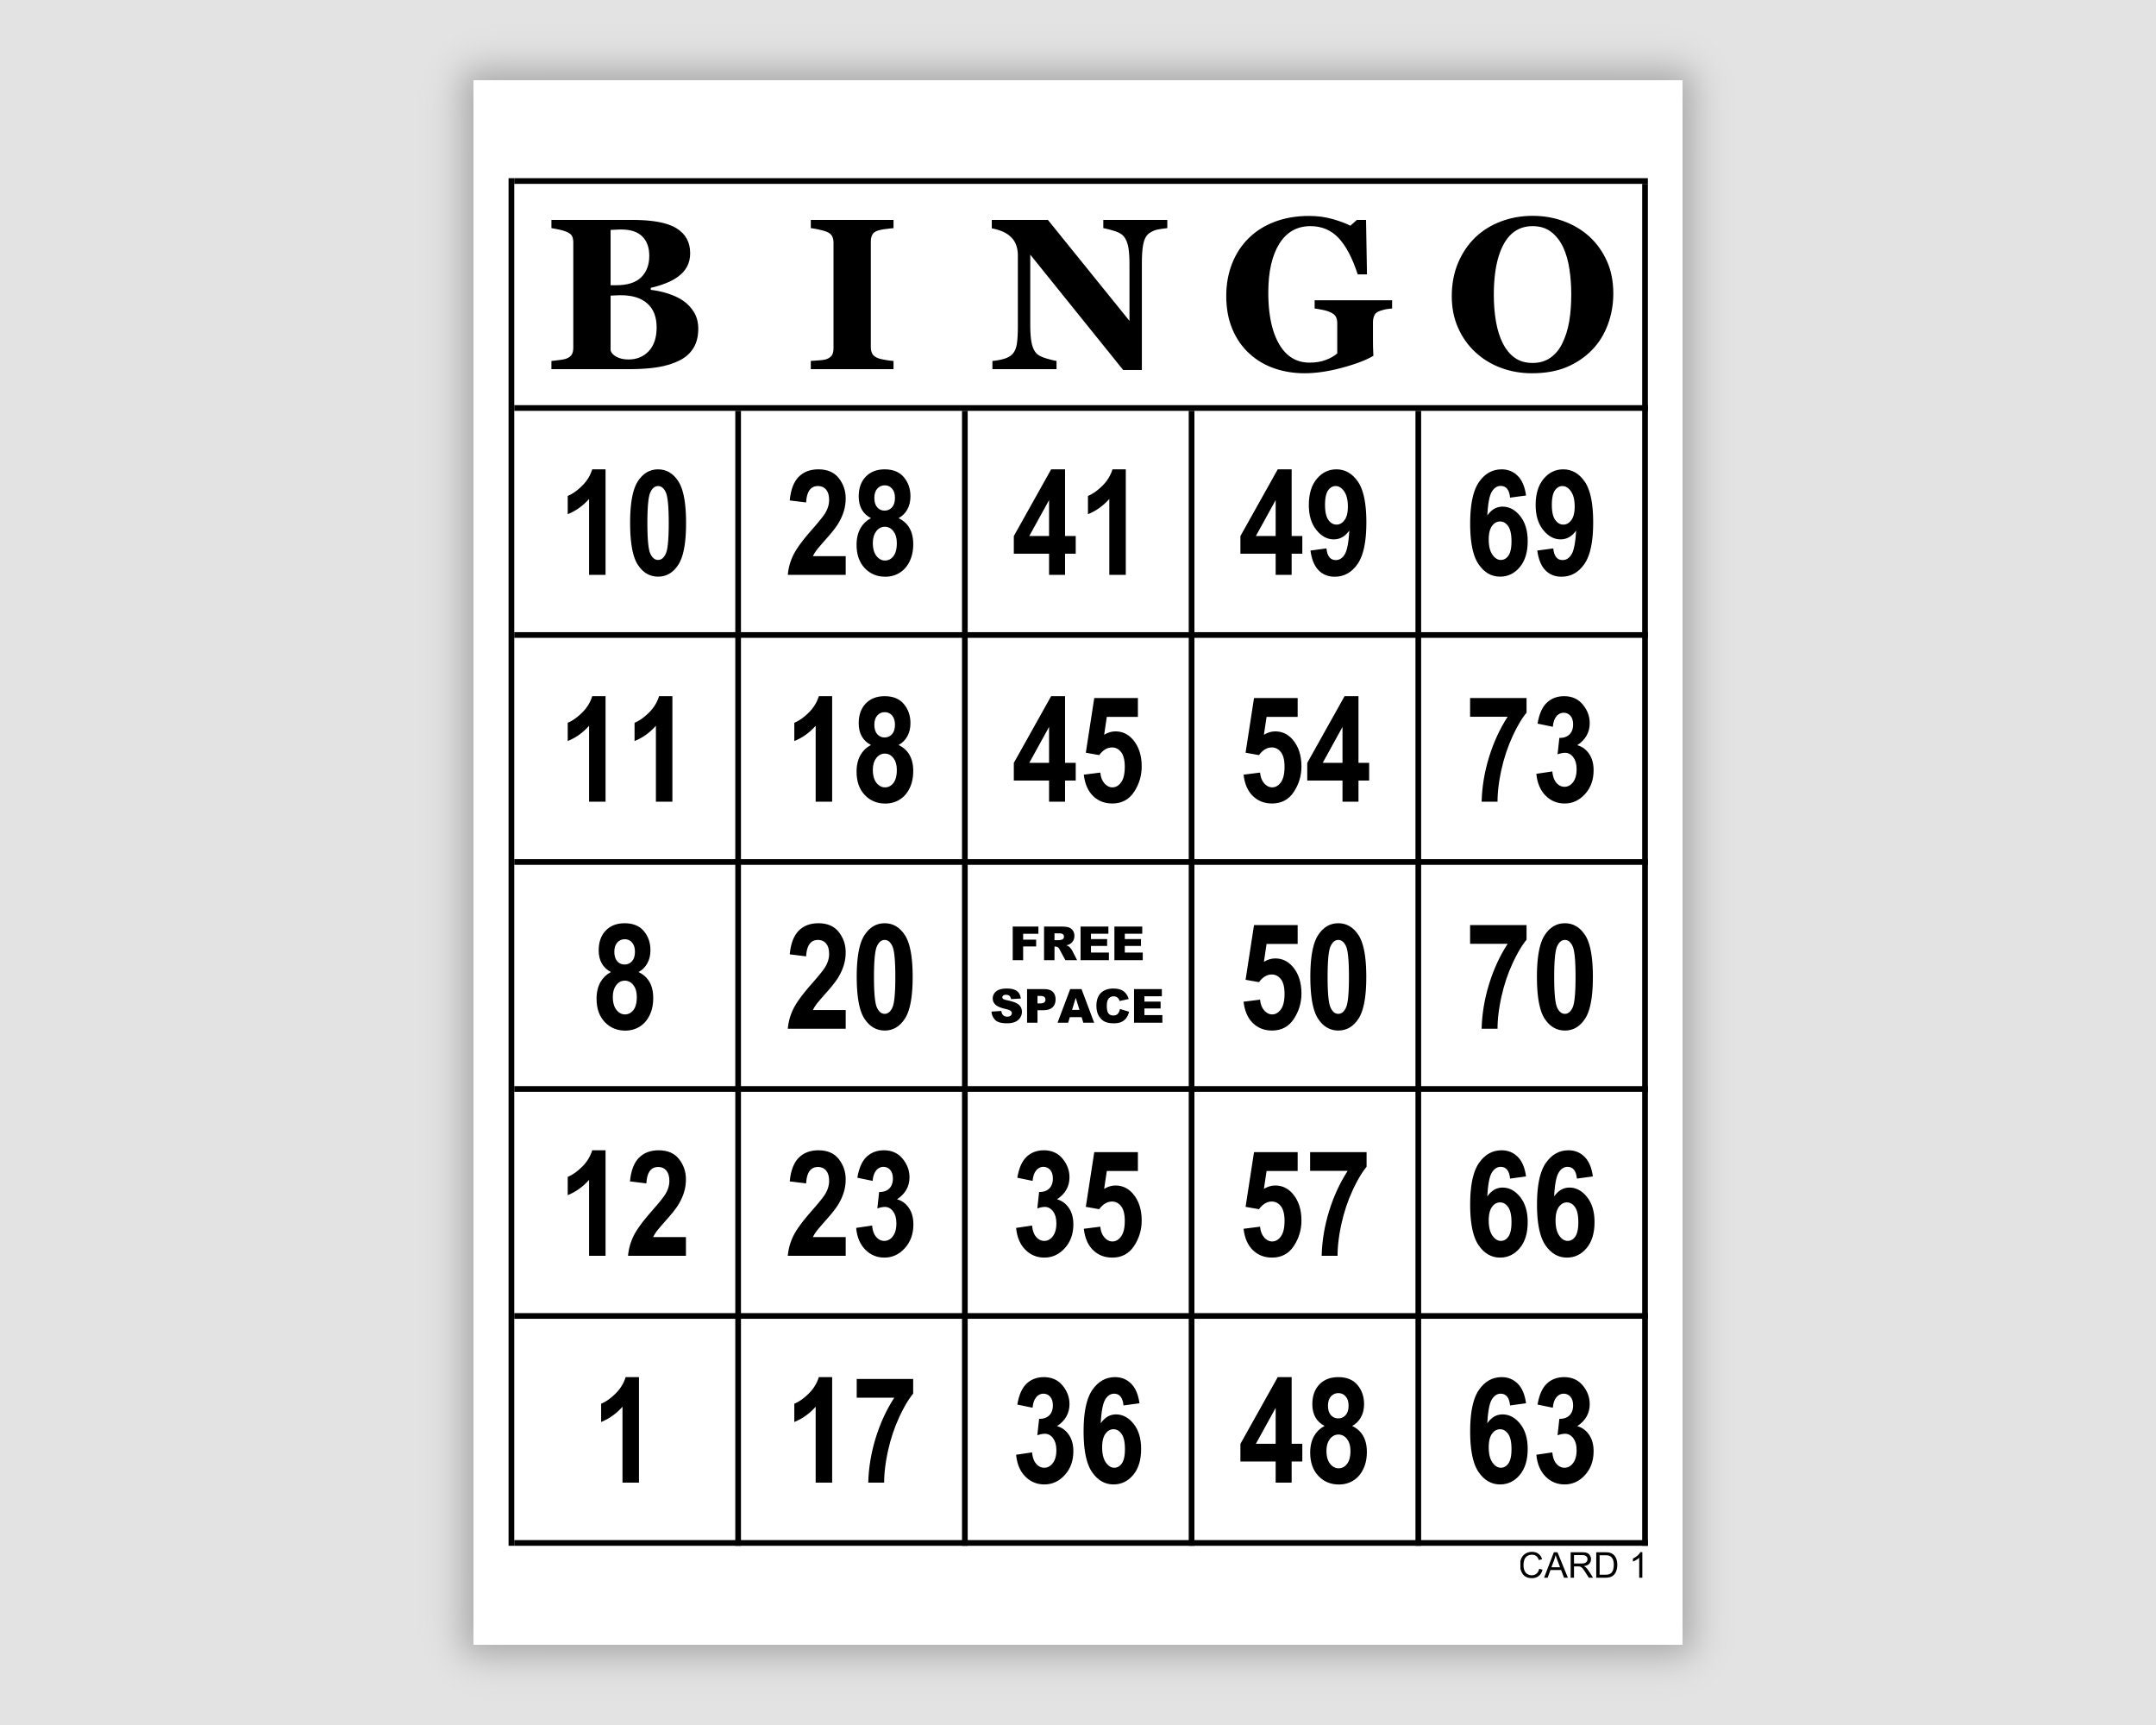 Carton de Bingo Jumbo